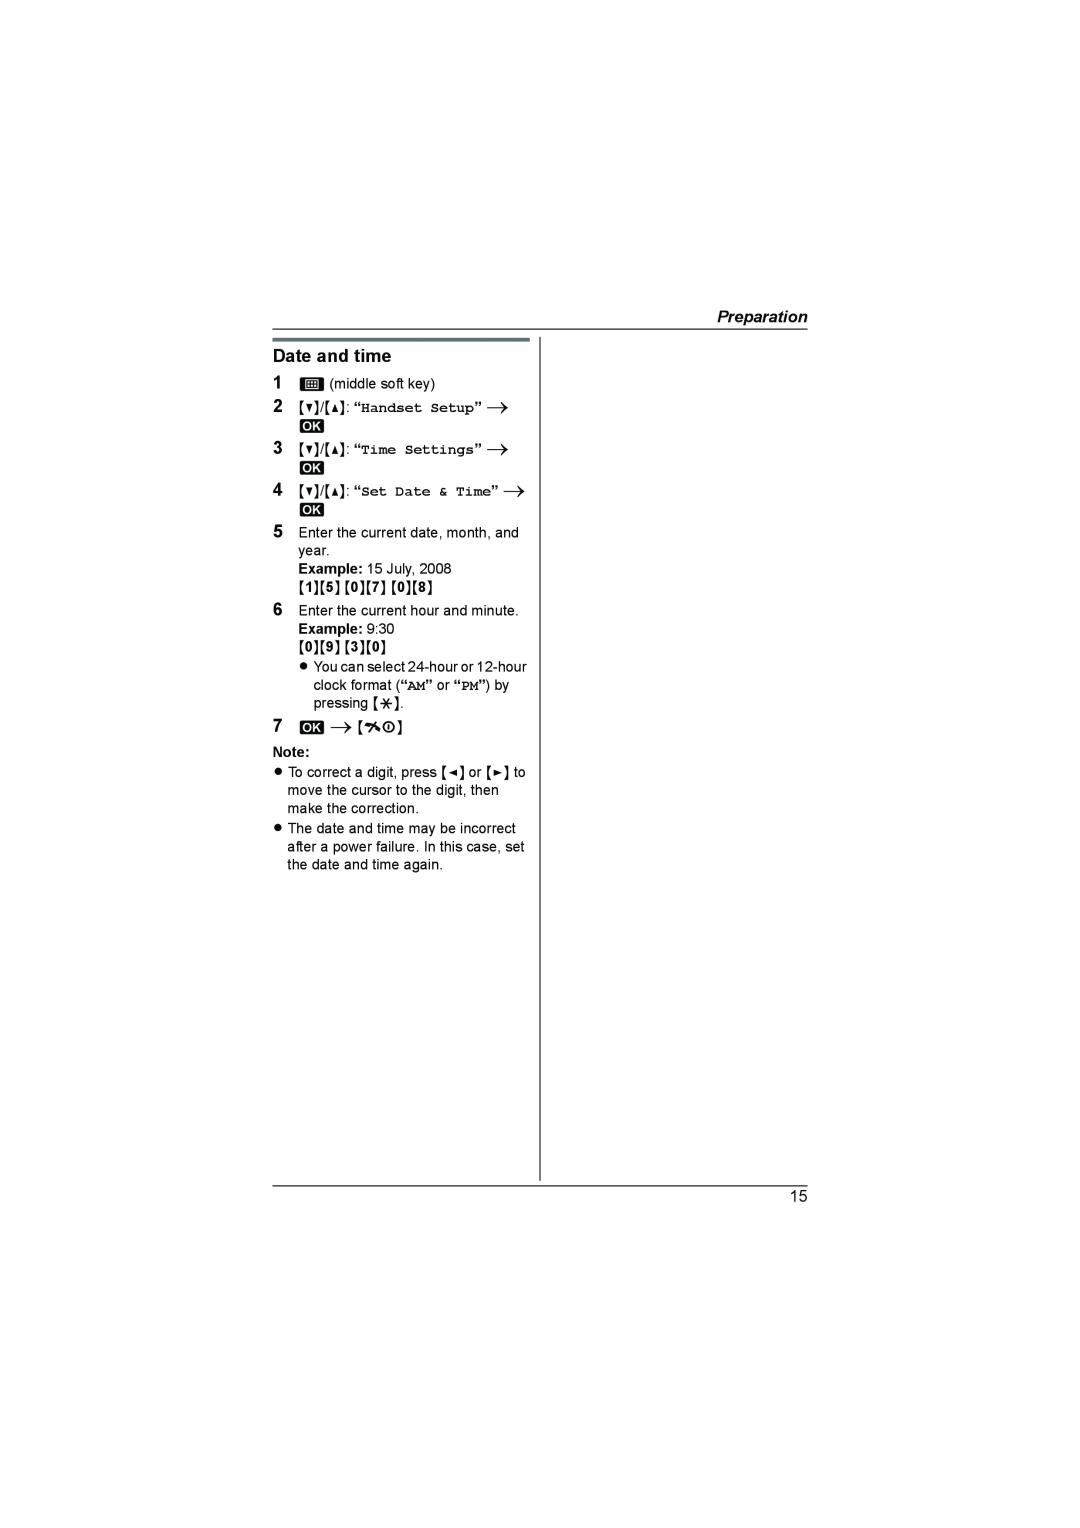 Panasonic KX-TG7341NZ Date and time, Preparation, 2 V/ “Handset Setup”, 3 V/ “Time Settings”, 4 V/ “Set Date & Time” 